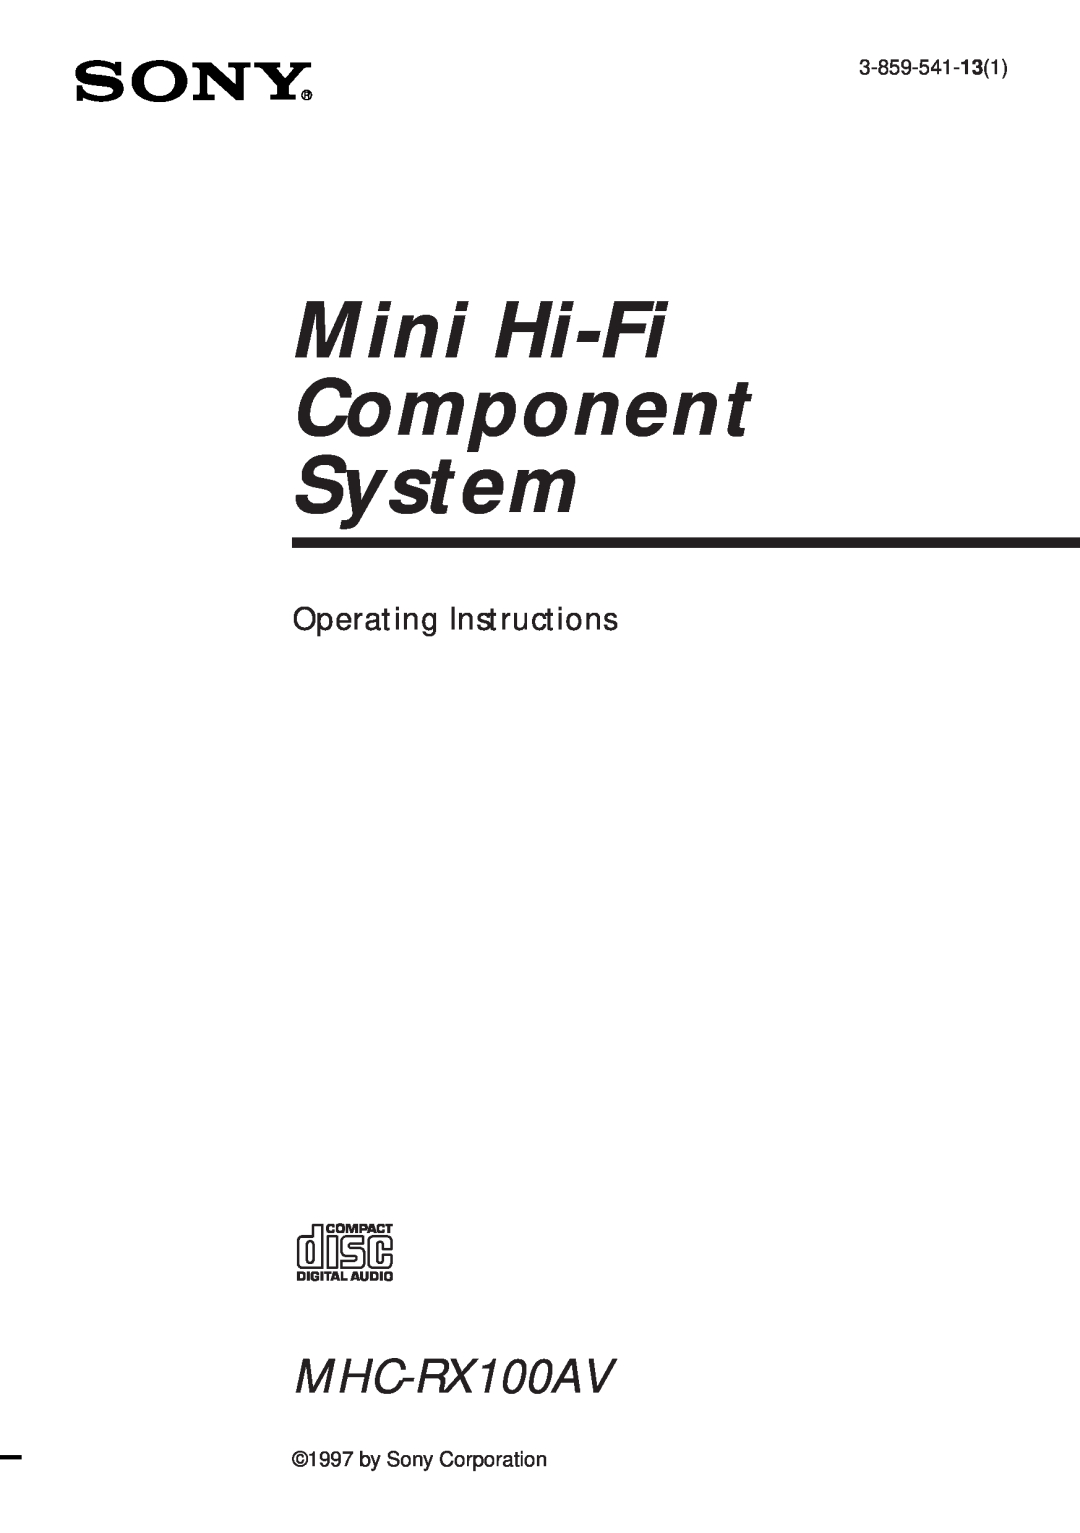 Sony MHC-RX100AV operating instructions Mini Hi-Fi Component System, Operating Instructions, 3-859-541-131 